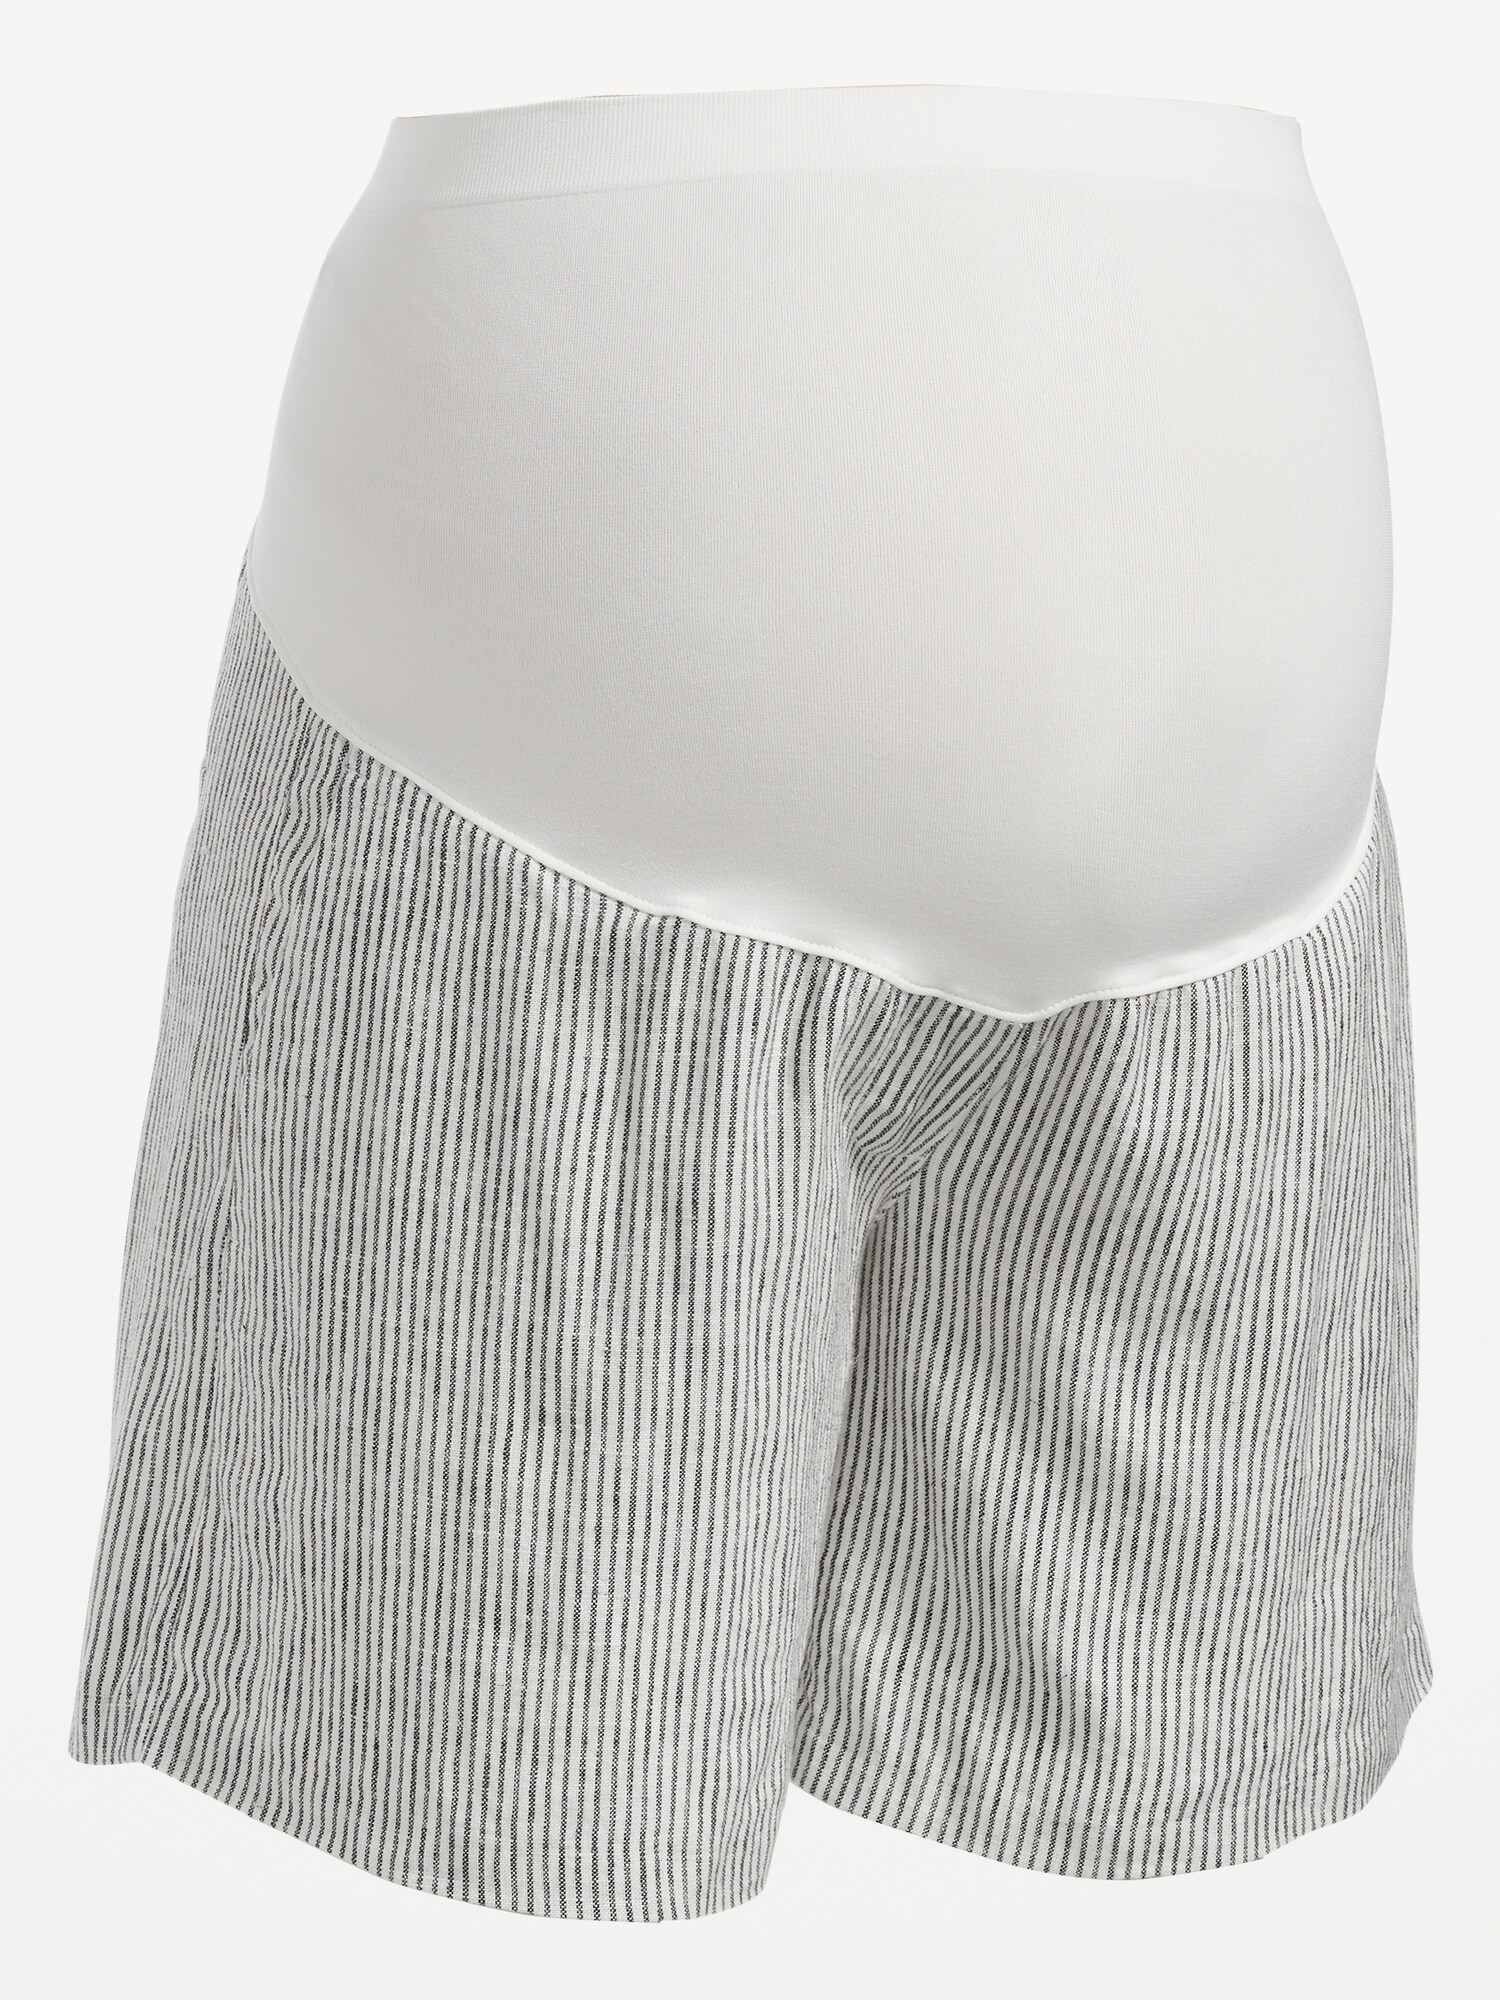 Off White Linen Blend Tailored Shorts